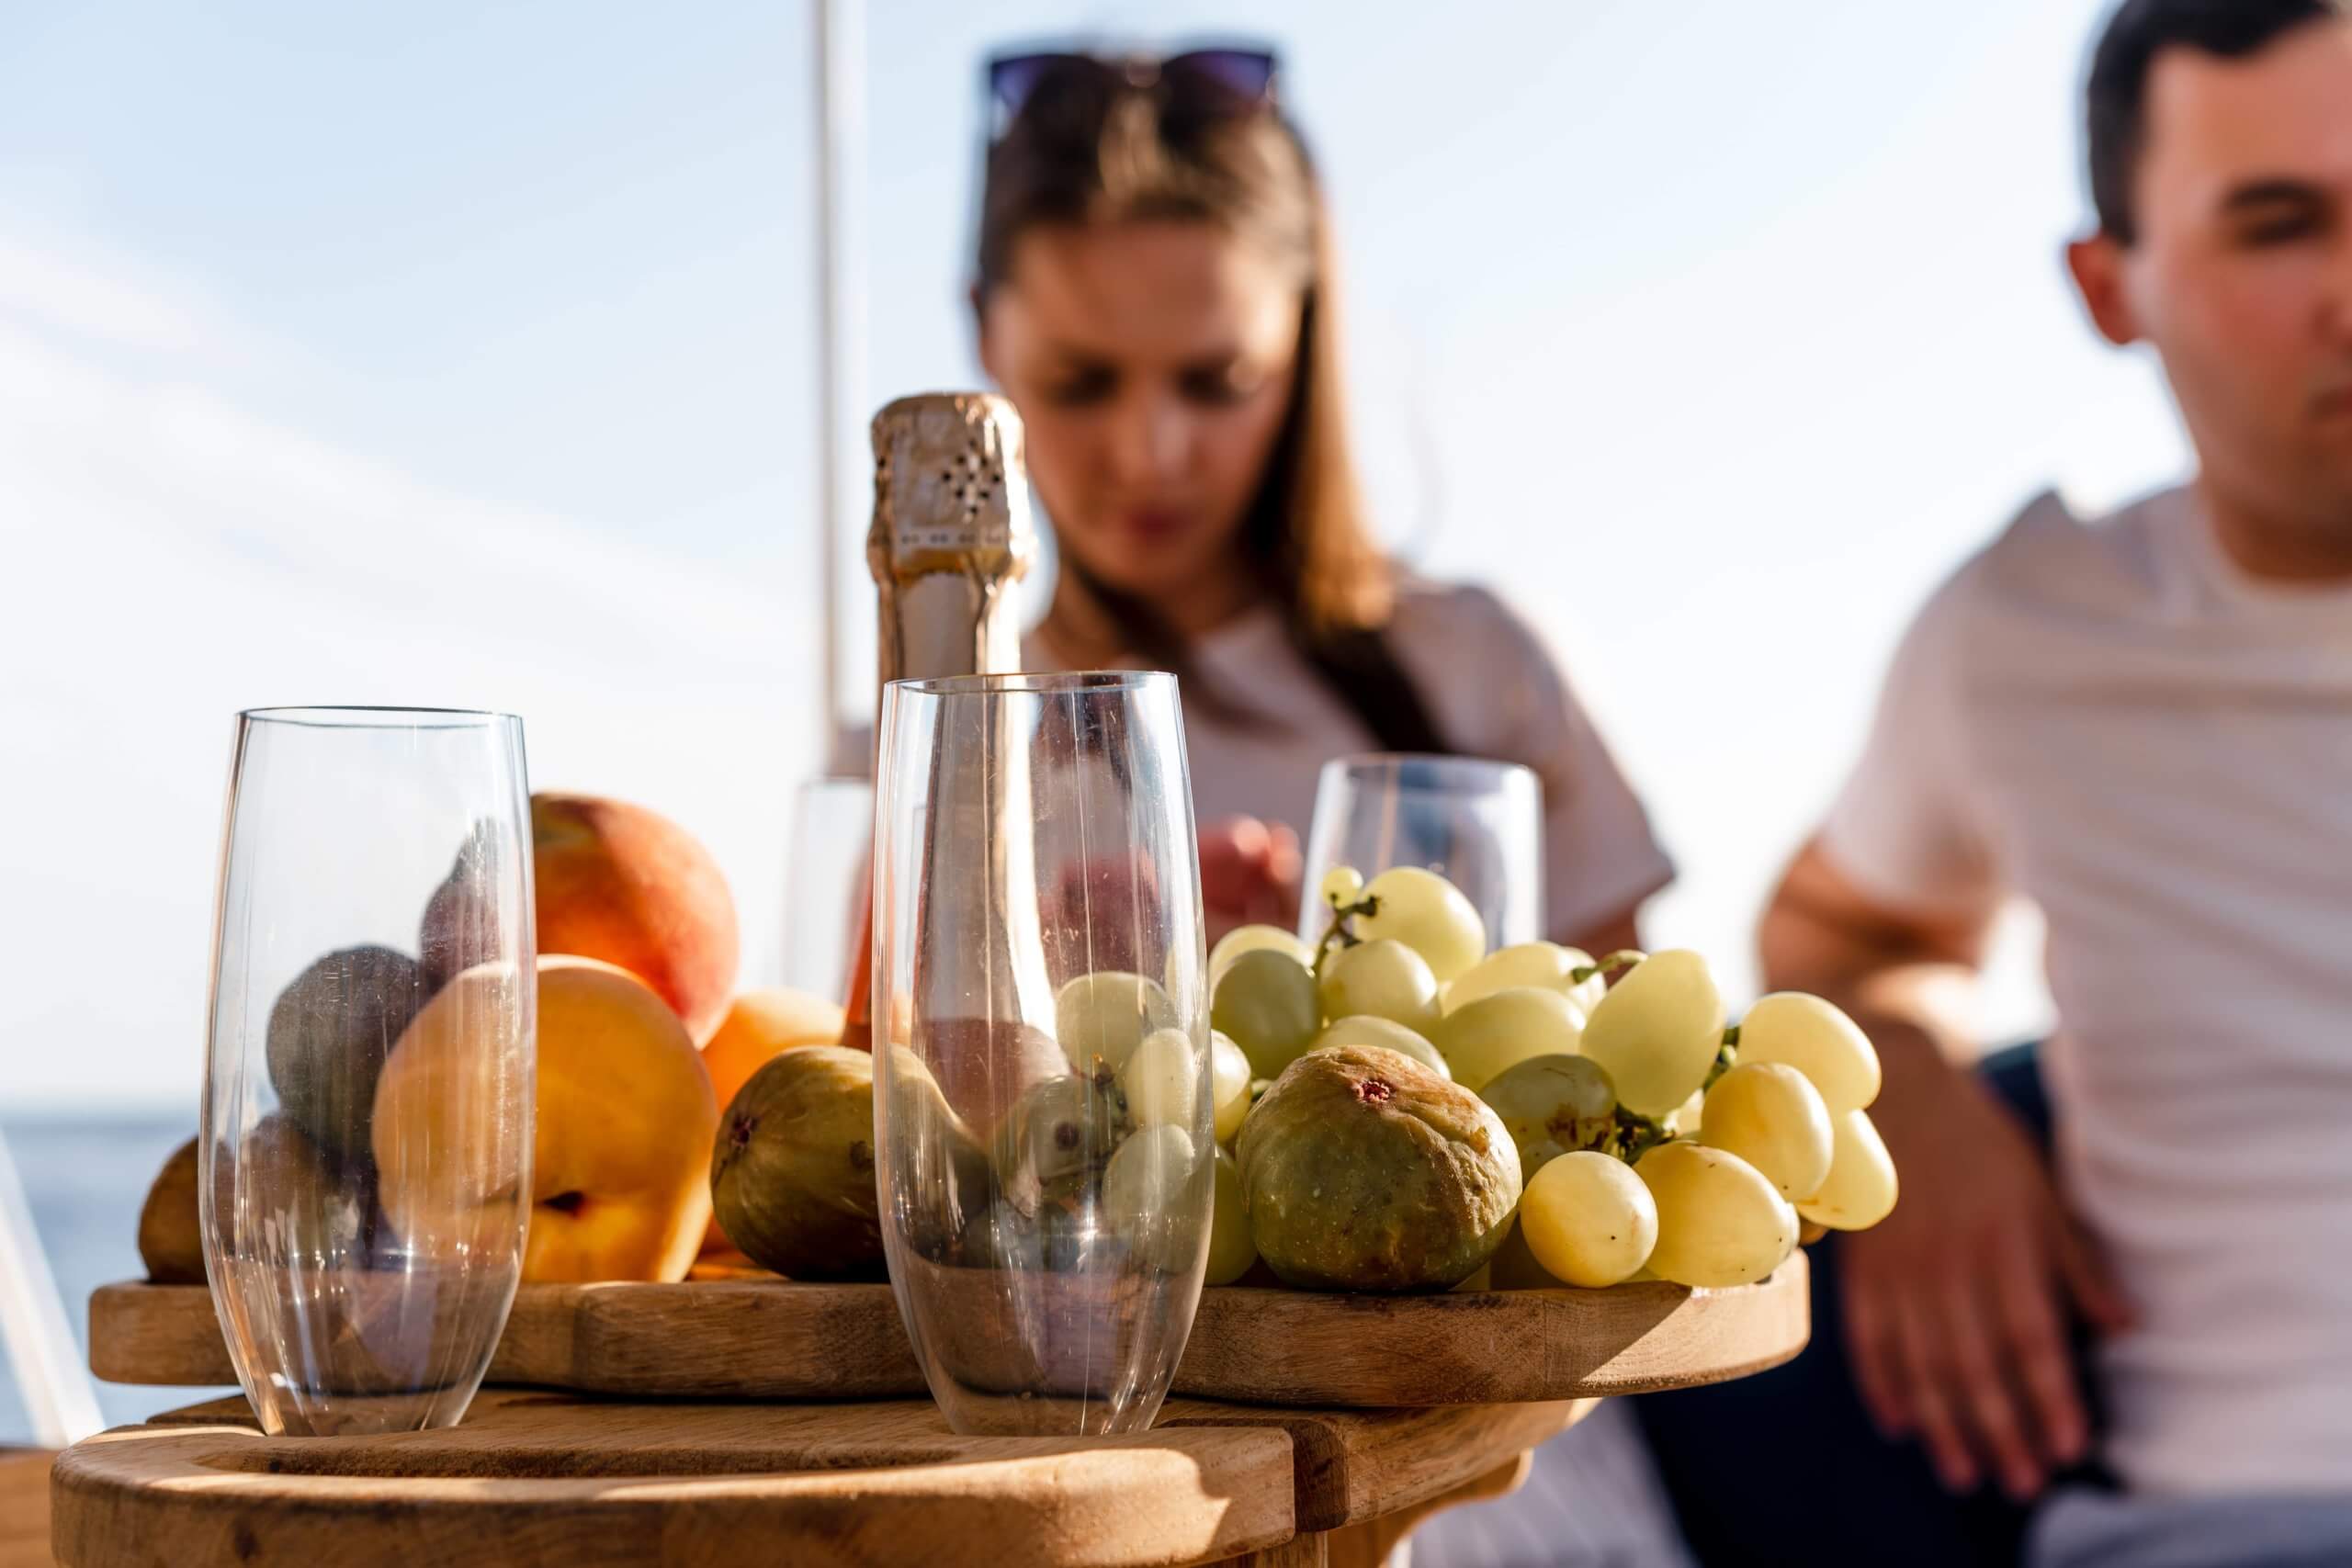 fruit-tray-and-bottle-of-champagne-for-romantic-da-2021-10-05-23-49-41-utc